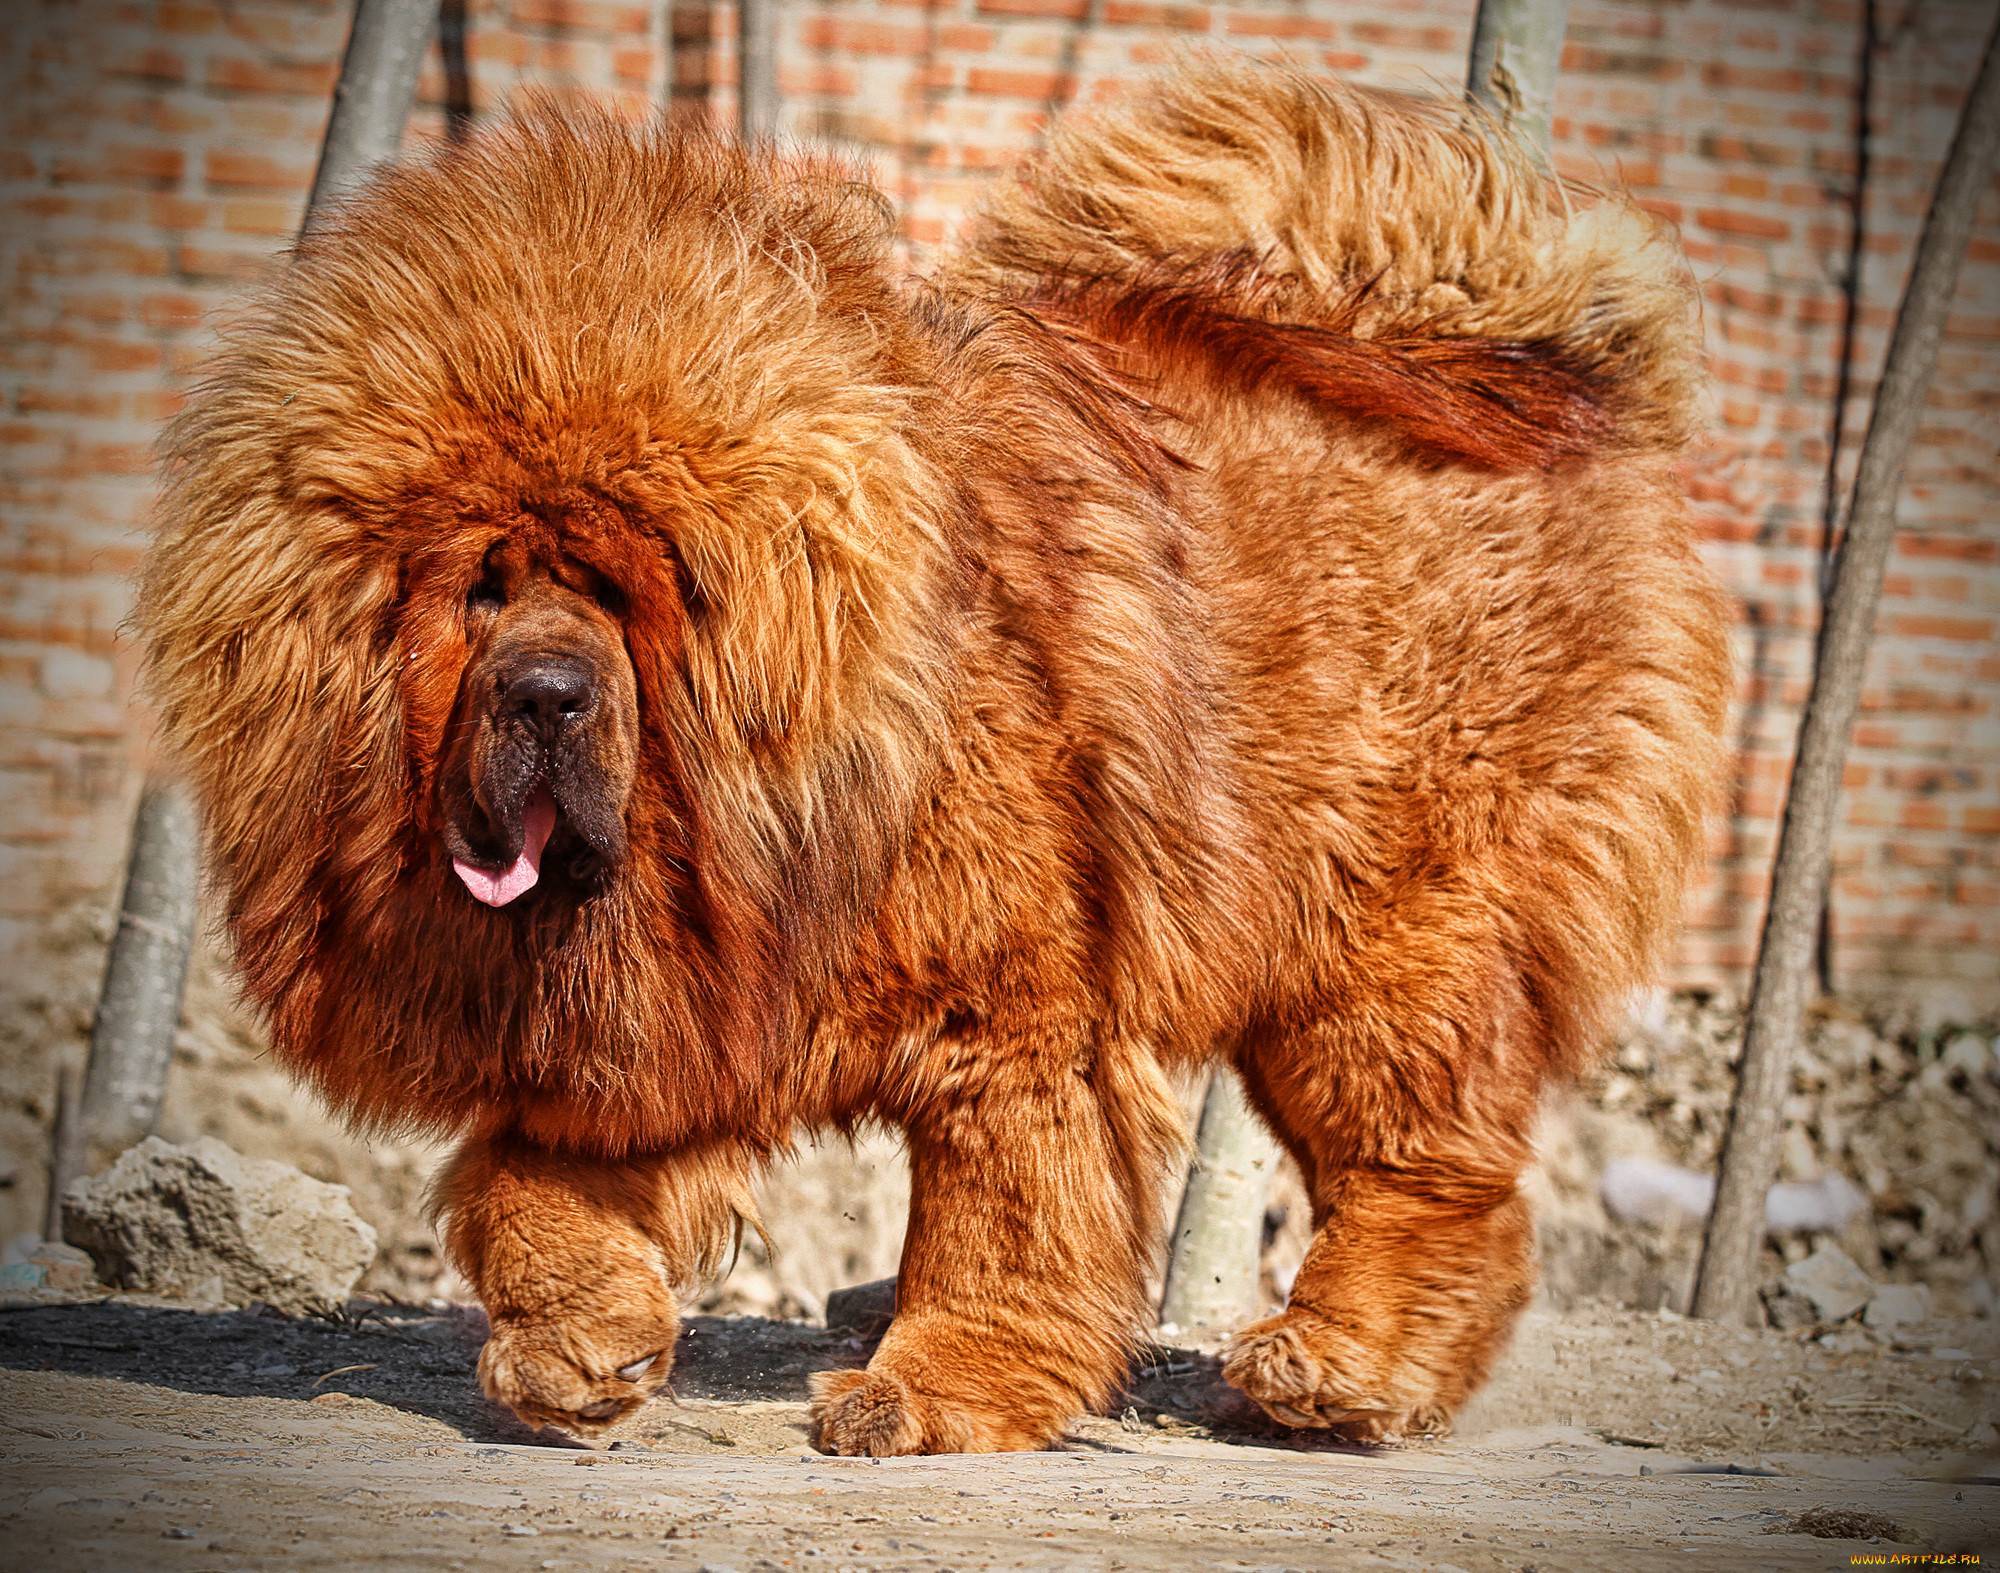 Тибетский мастиф собака. описание, особенности, уход и цена тибетского мастифа | sobakagav.ru